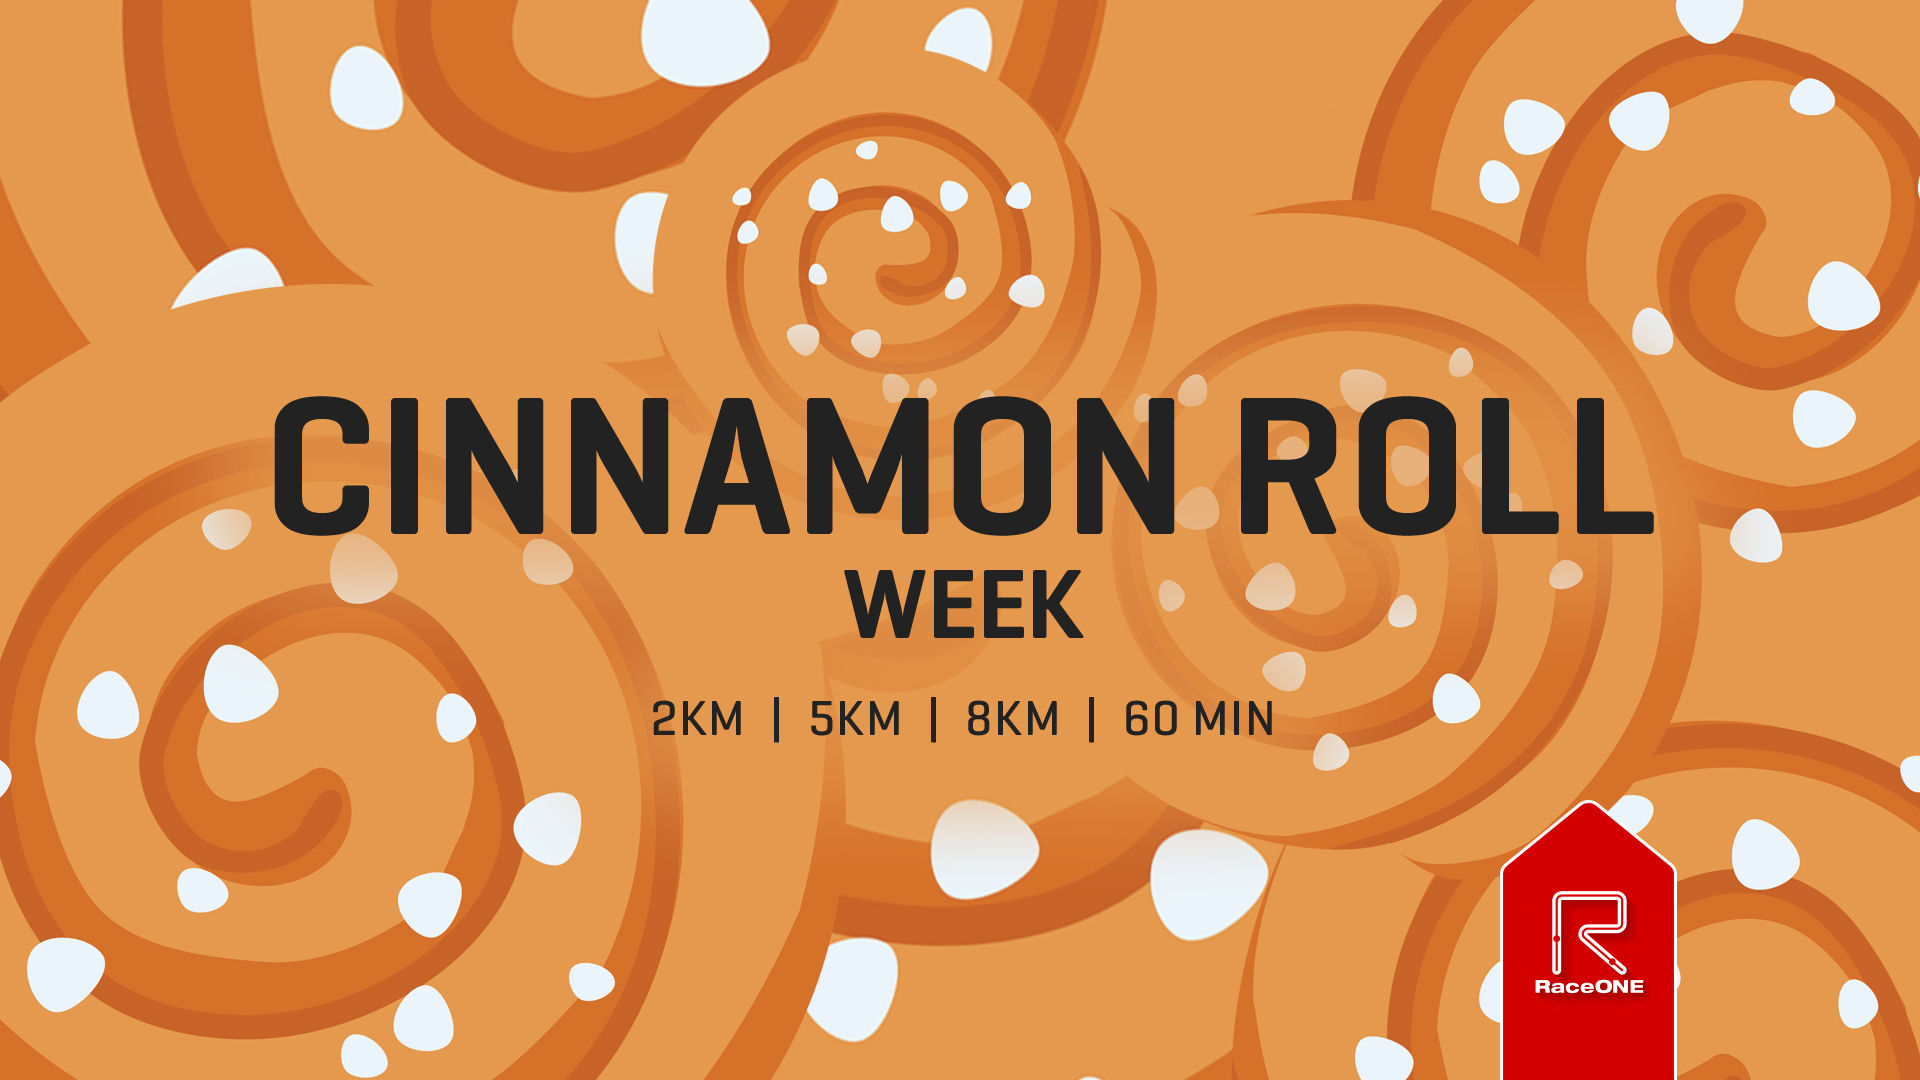 Cinnamon Roll Week - 5km